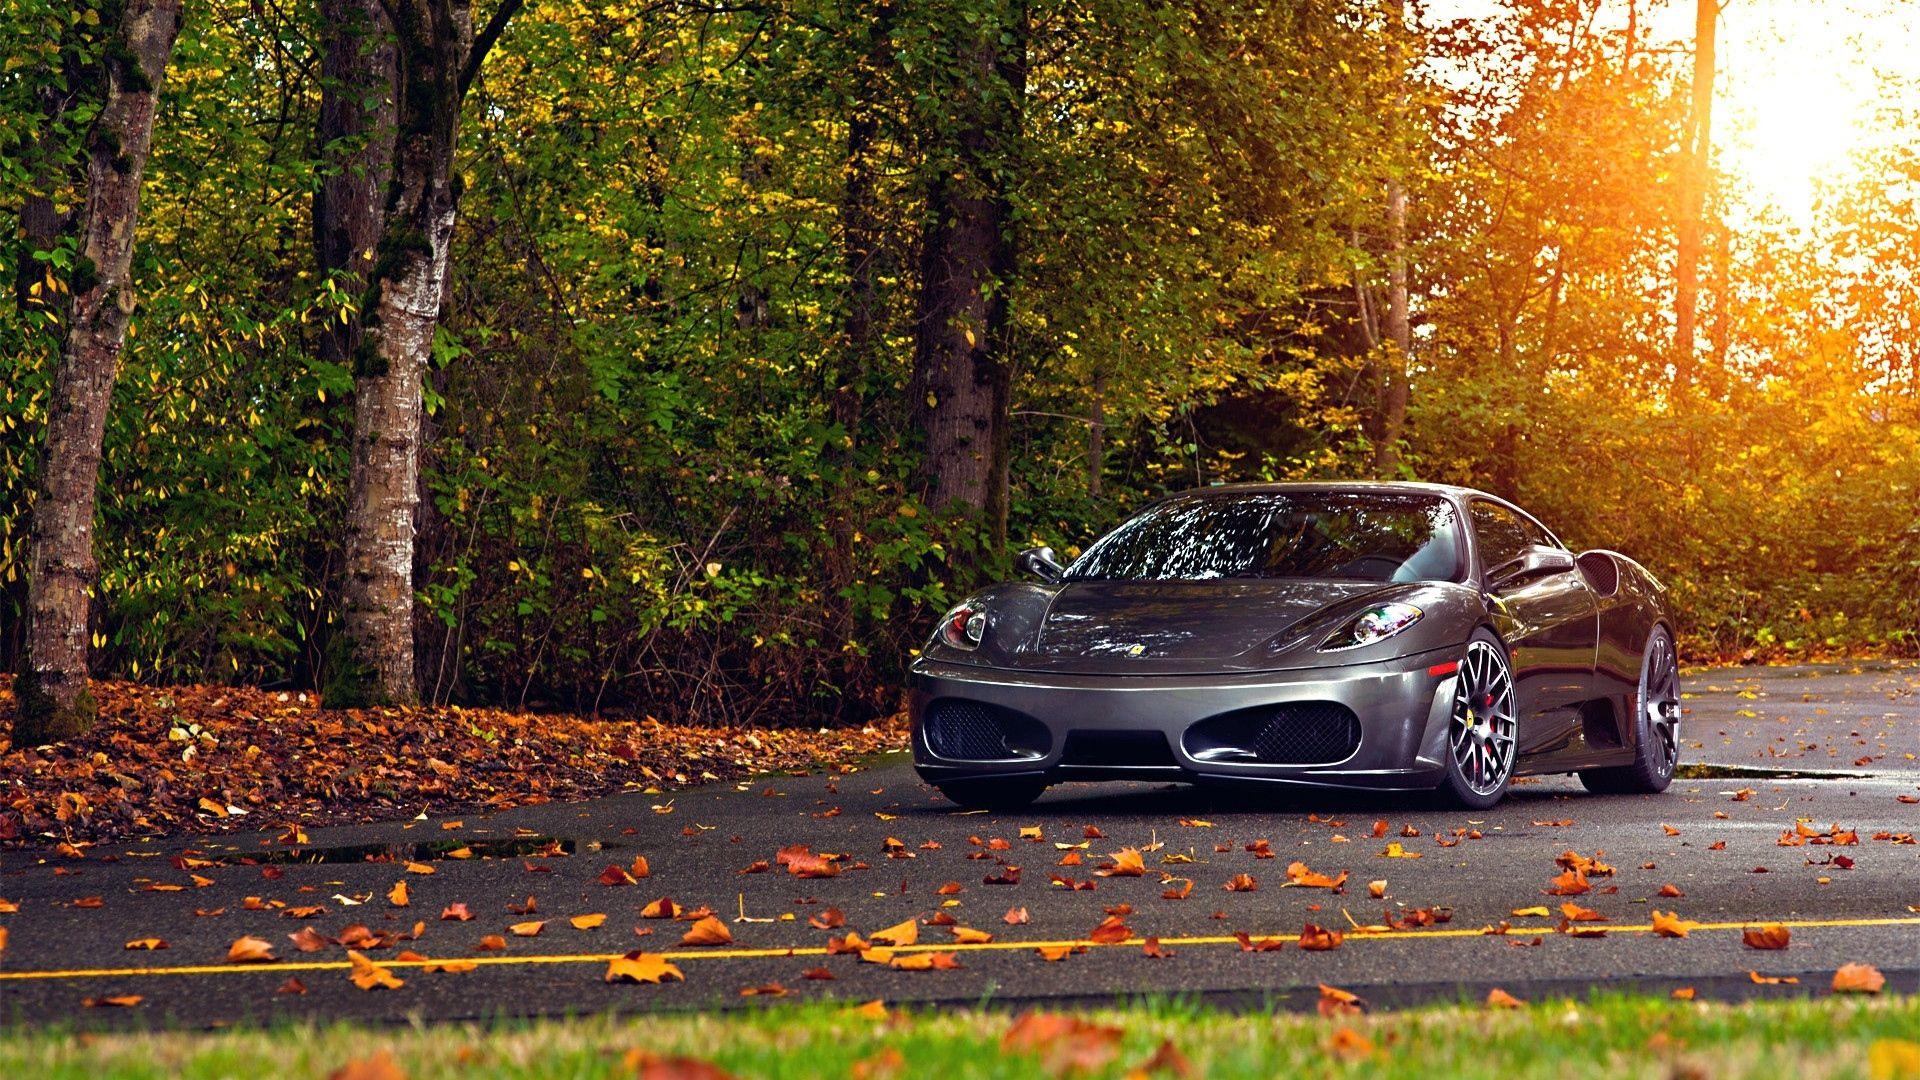 Photos Of Full HD Wallpaper Ferrari Scuderia Sports Car Autumn